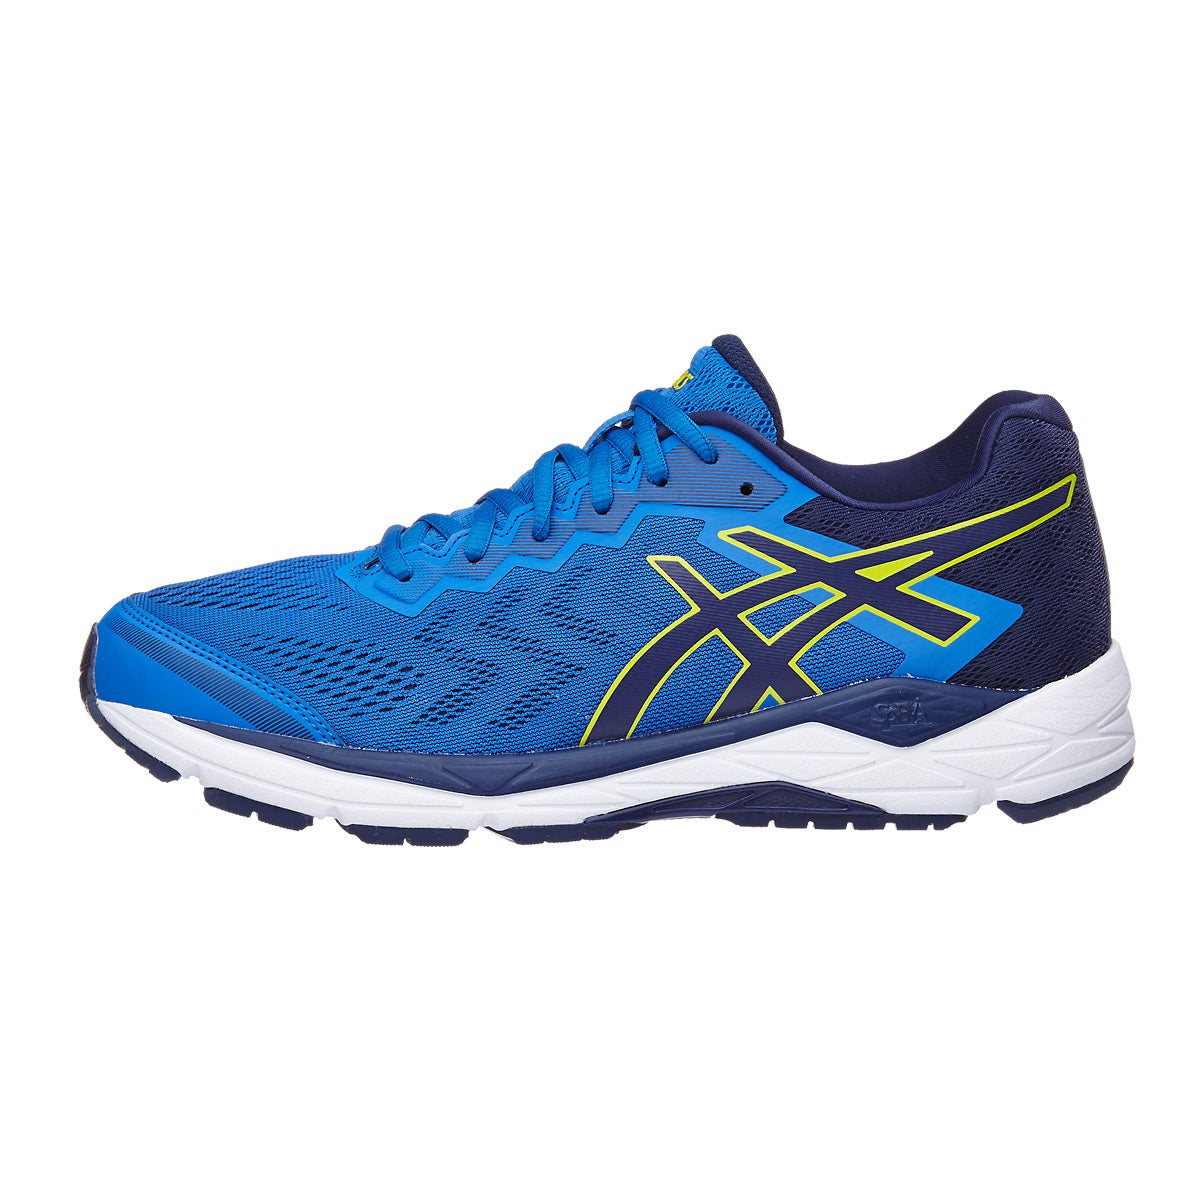 ASICS Gel Fortitude 8 Men's Shoes Blue/Blue/Sulphur 360° View | Running ...